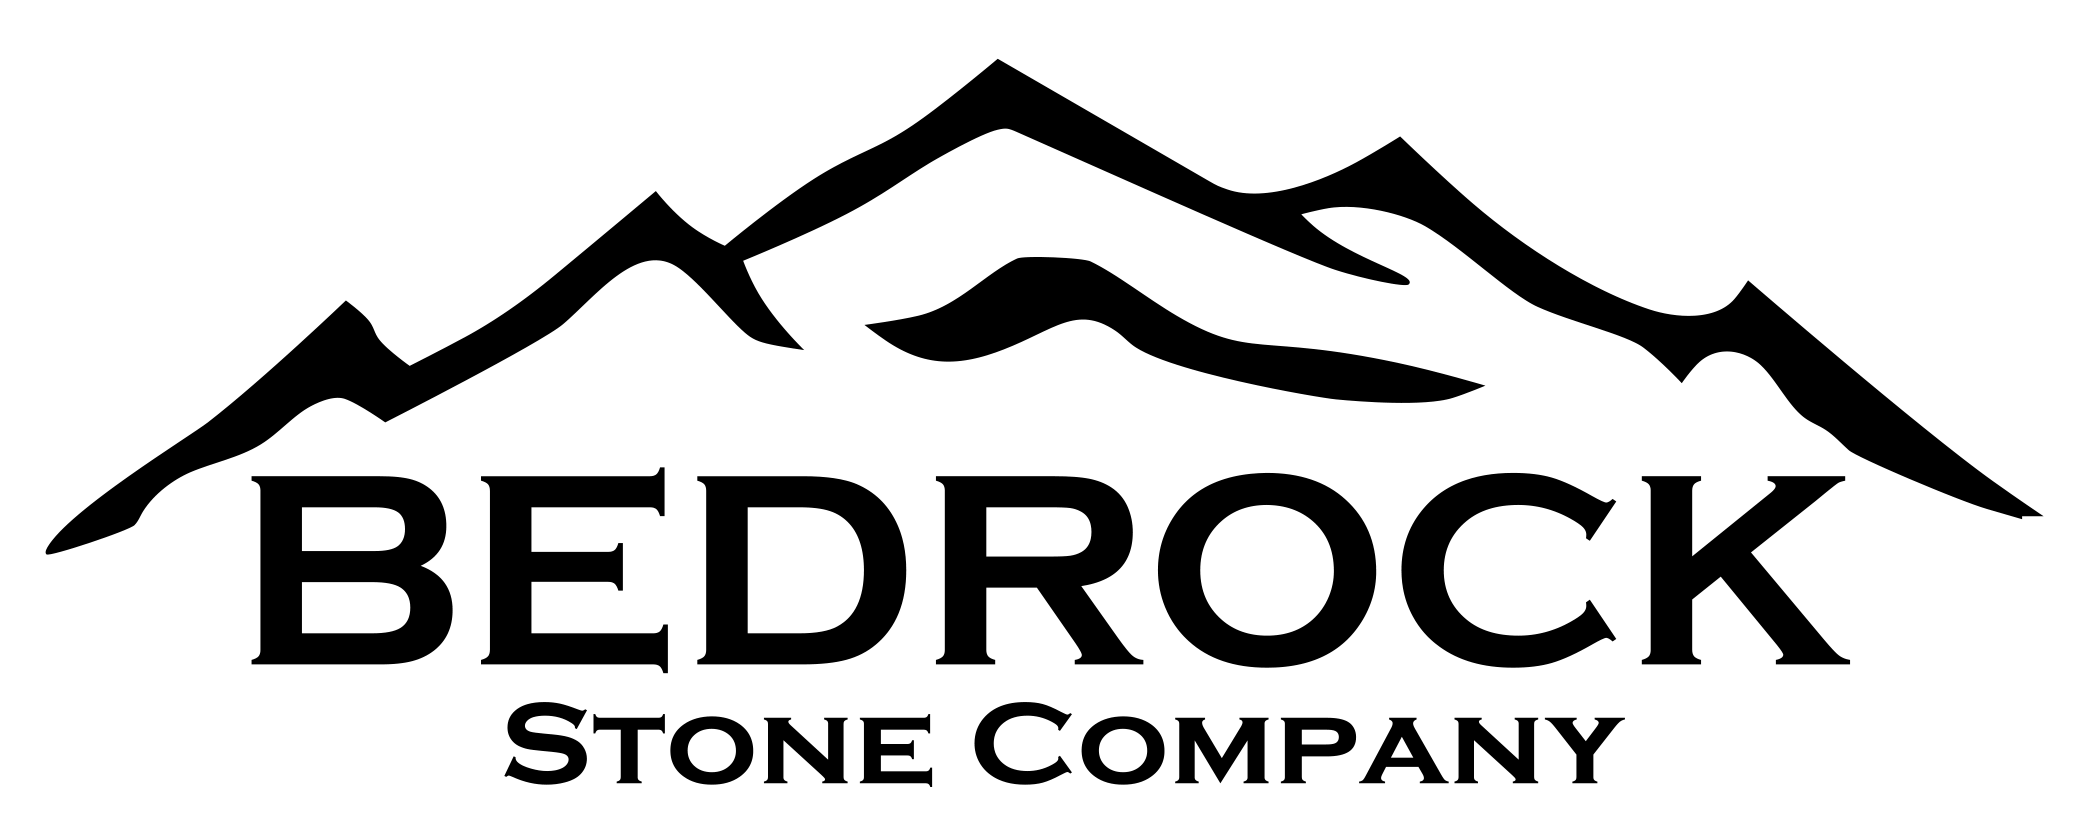 Rock Company Logo - Crab Orchard Stone - Bedrock Stone | Crab Orchard Rock Supplier